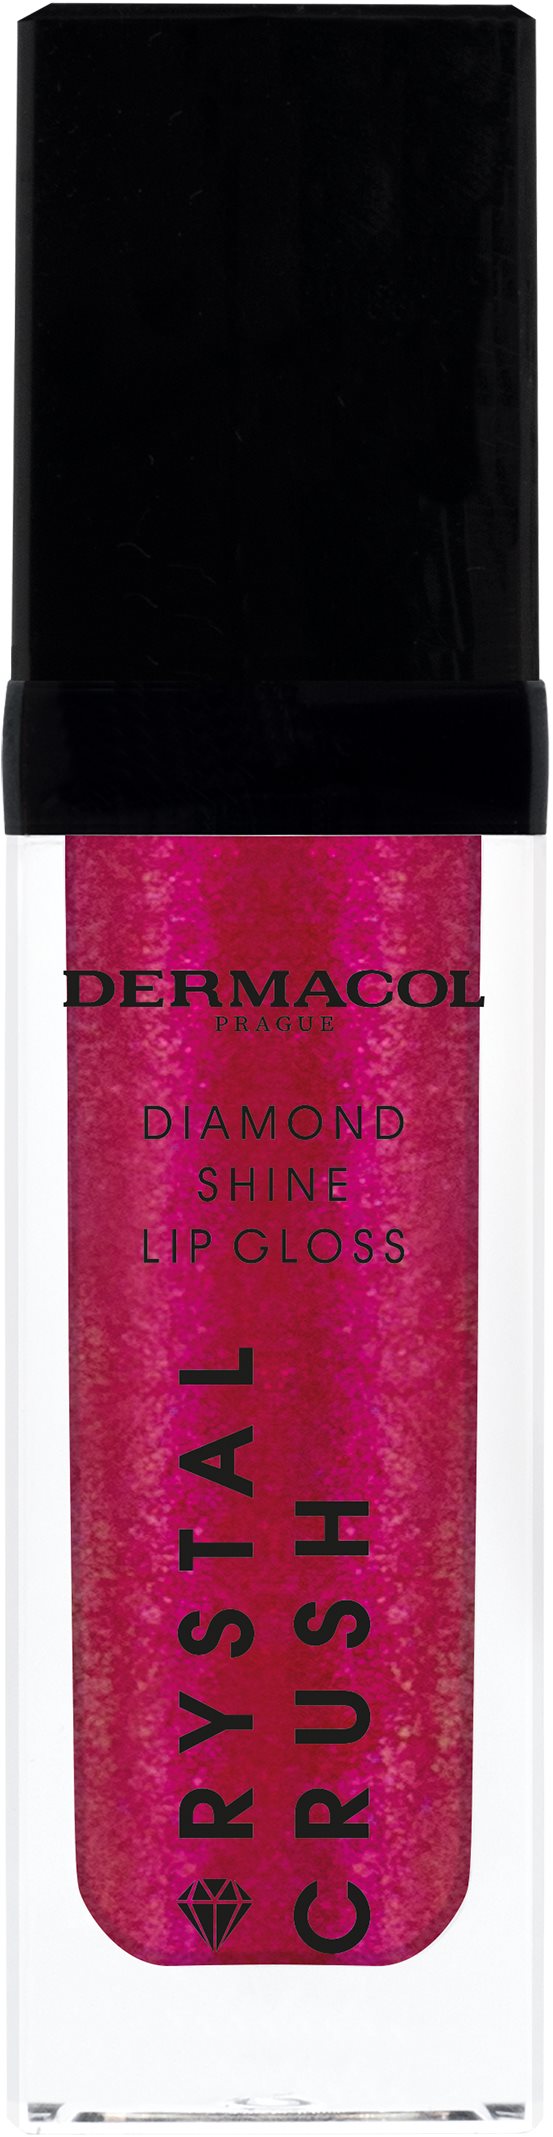 DERMACOL Crystal Crush Diamond Shine Lip Gloss No.05